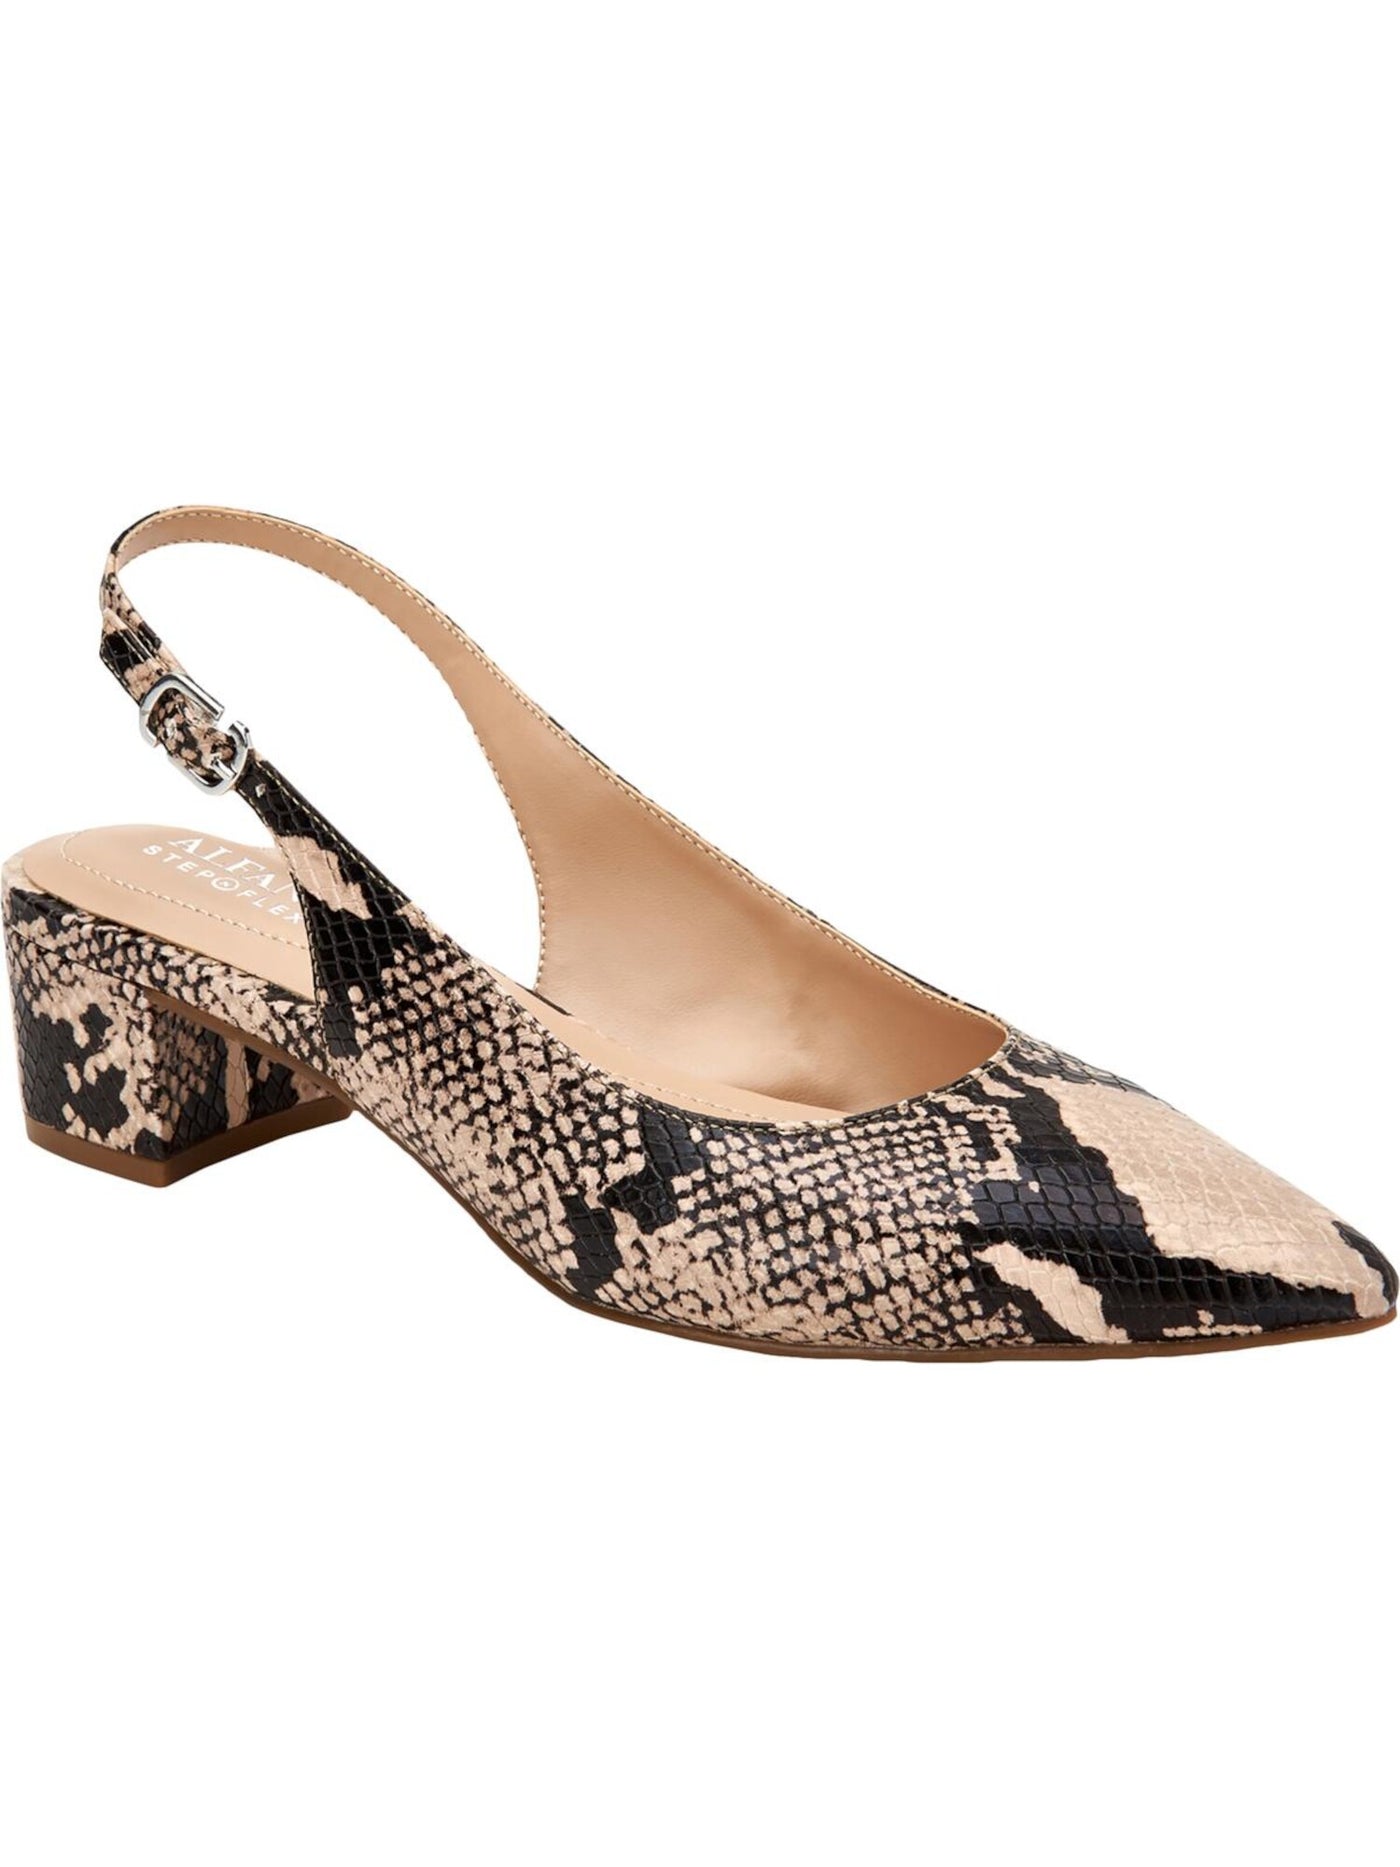 ALFANI Womens Beige Snakeskin Padded Comfort Charrlee Pointed Toe Block Heel Buckle Slingback 6 M